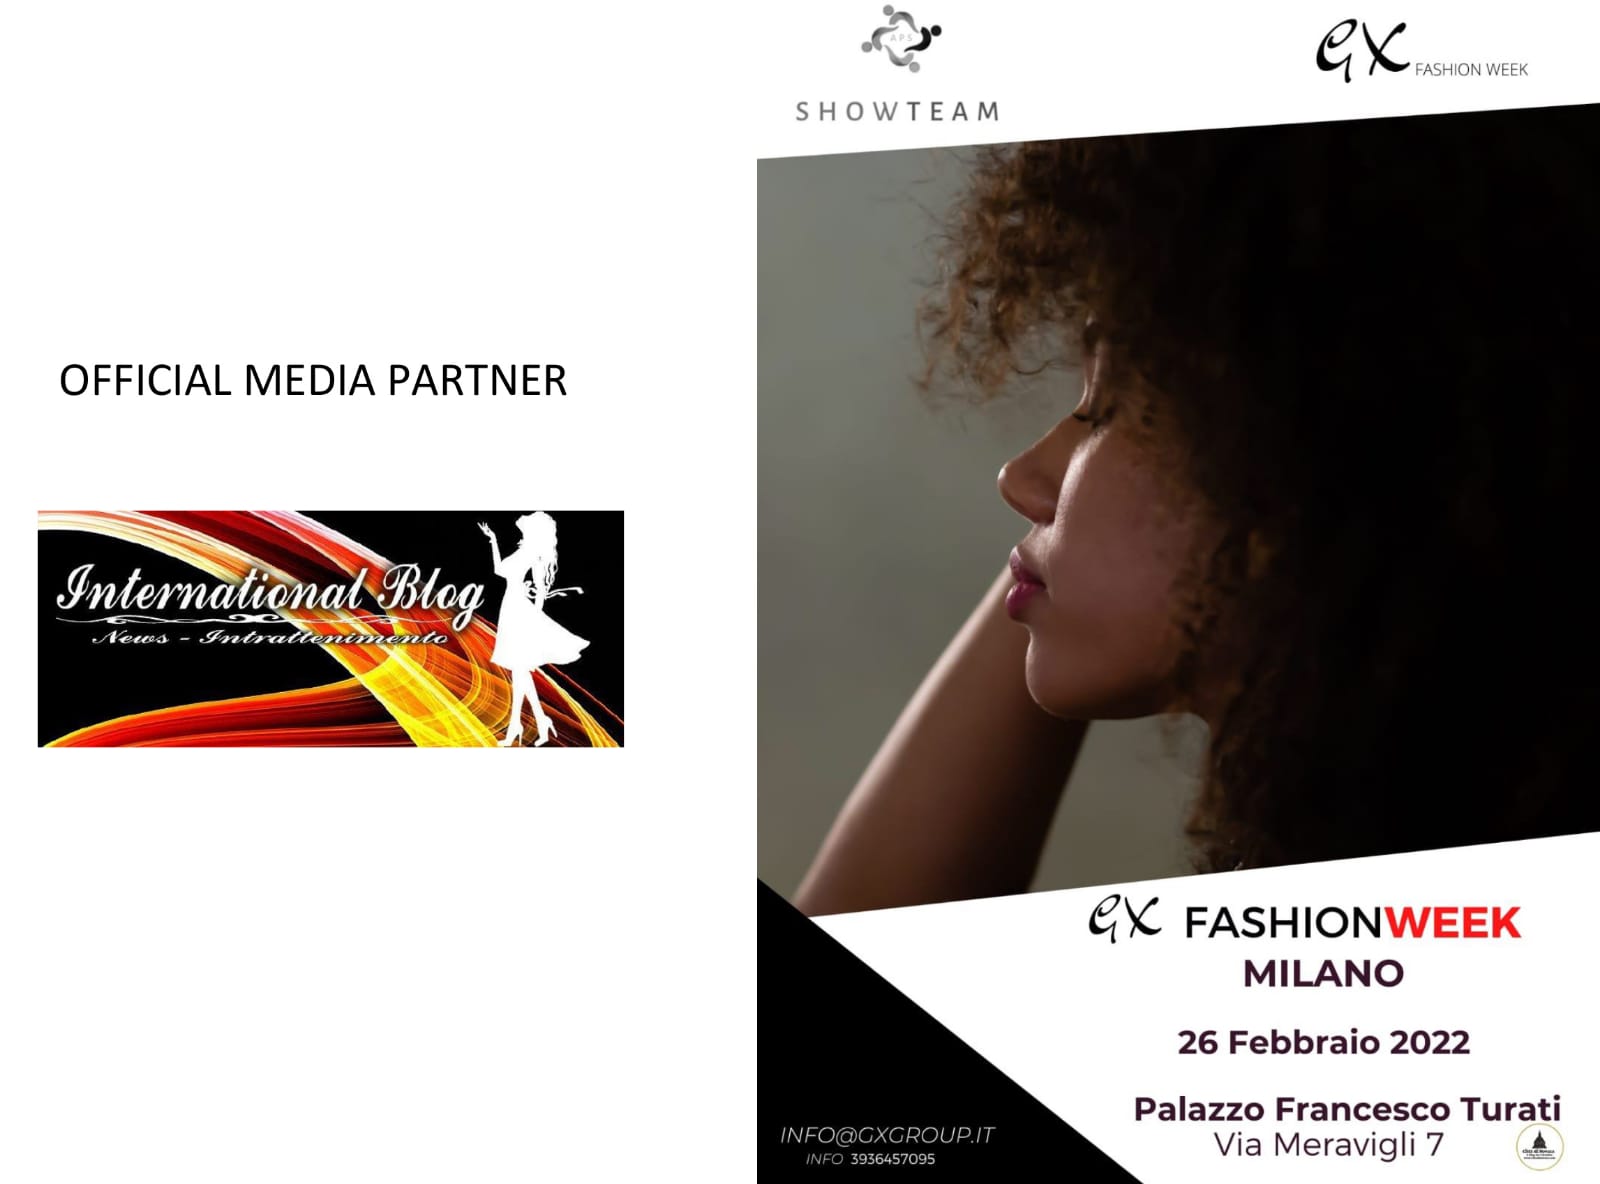 Gx Fashion Week, International Blog diventa media partner